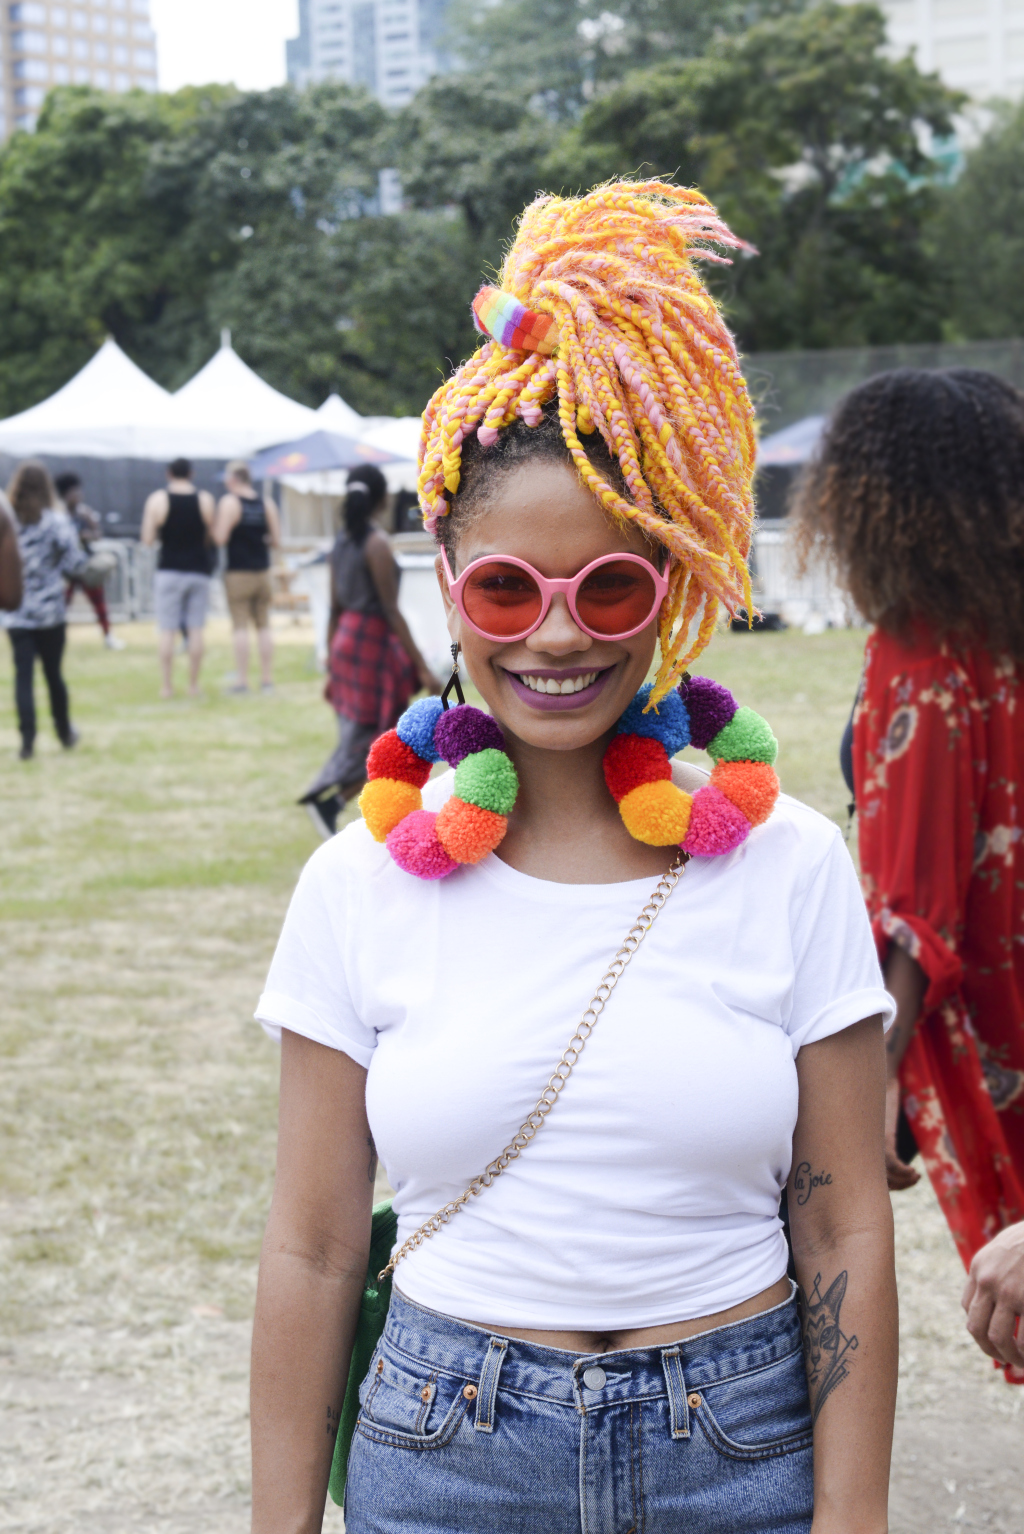 emilytaylor afropunk - Afropunk : 37 looks épatants repérés au festival new-yorkais